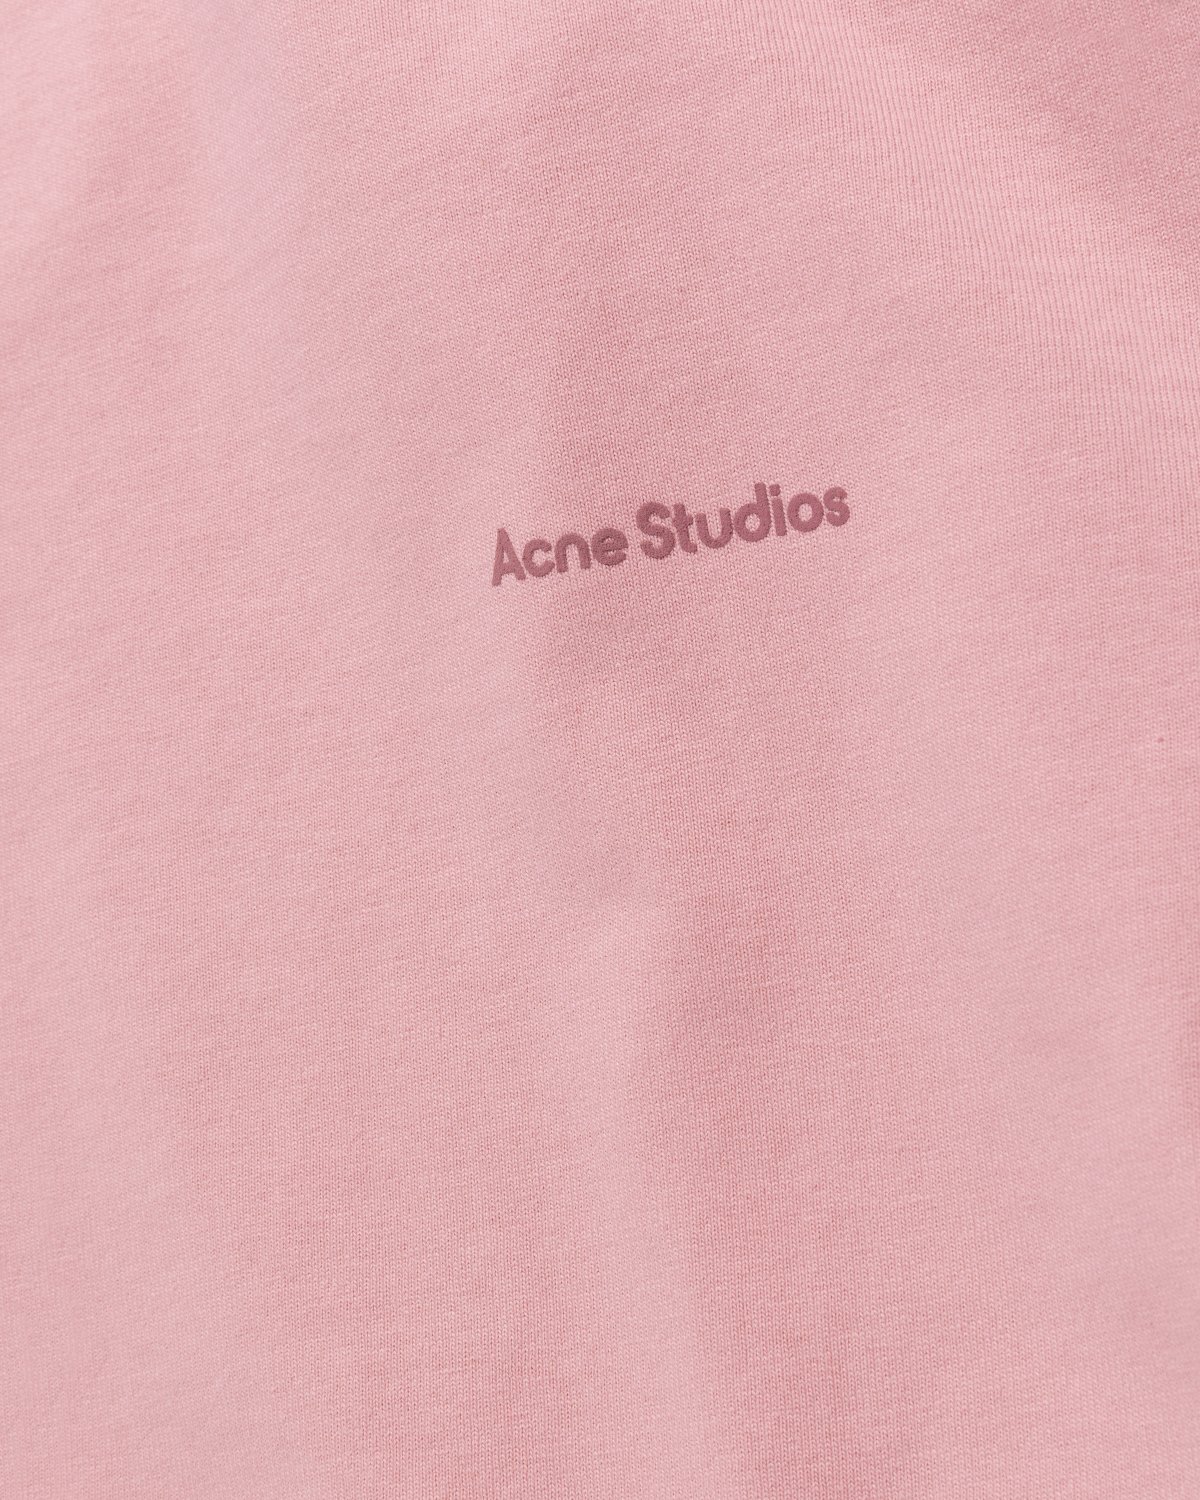 Acne Studios - Logo T-Shirt Pink - Clothing - Pink - Image 4